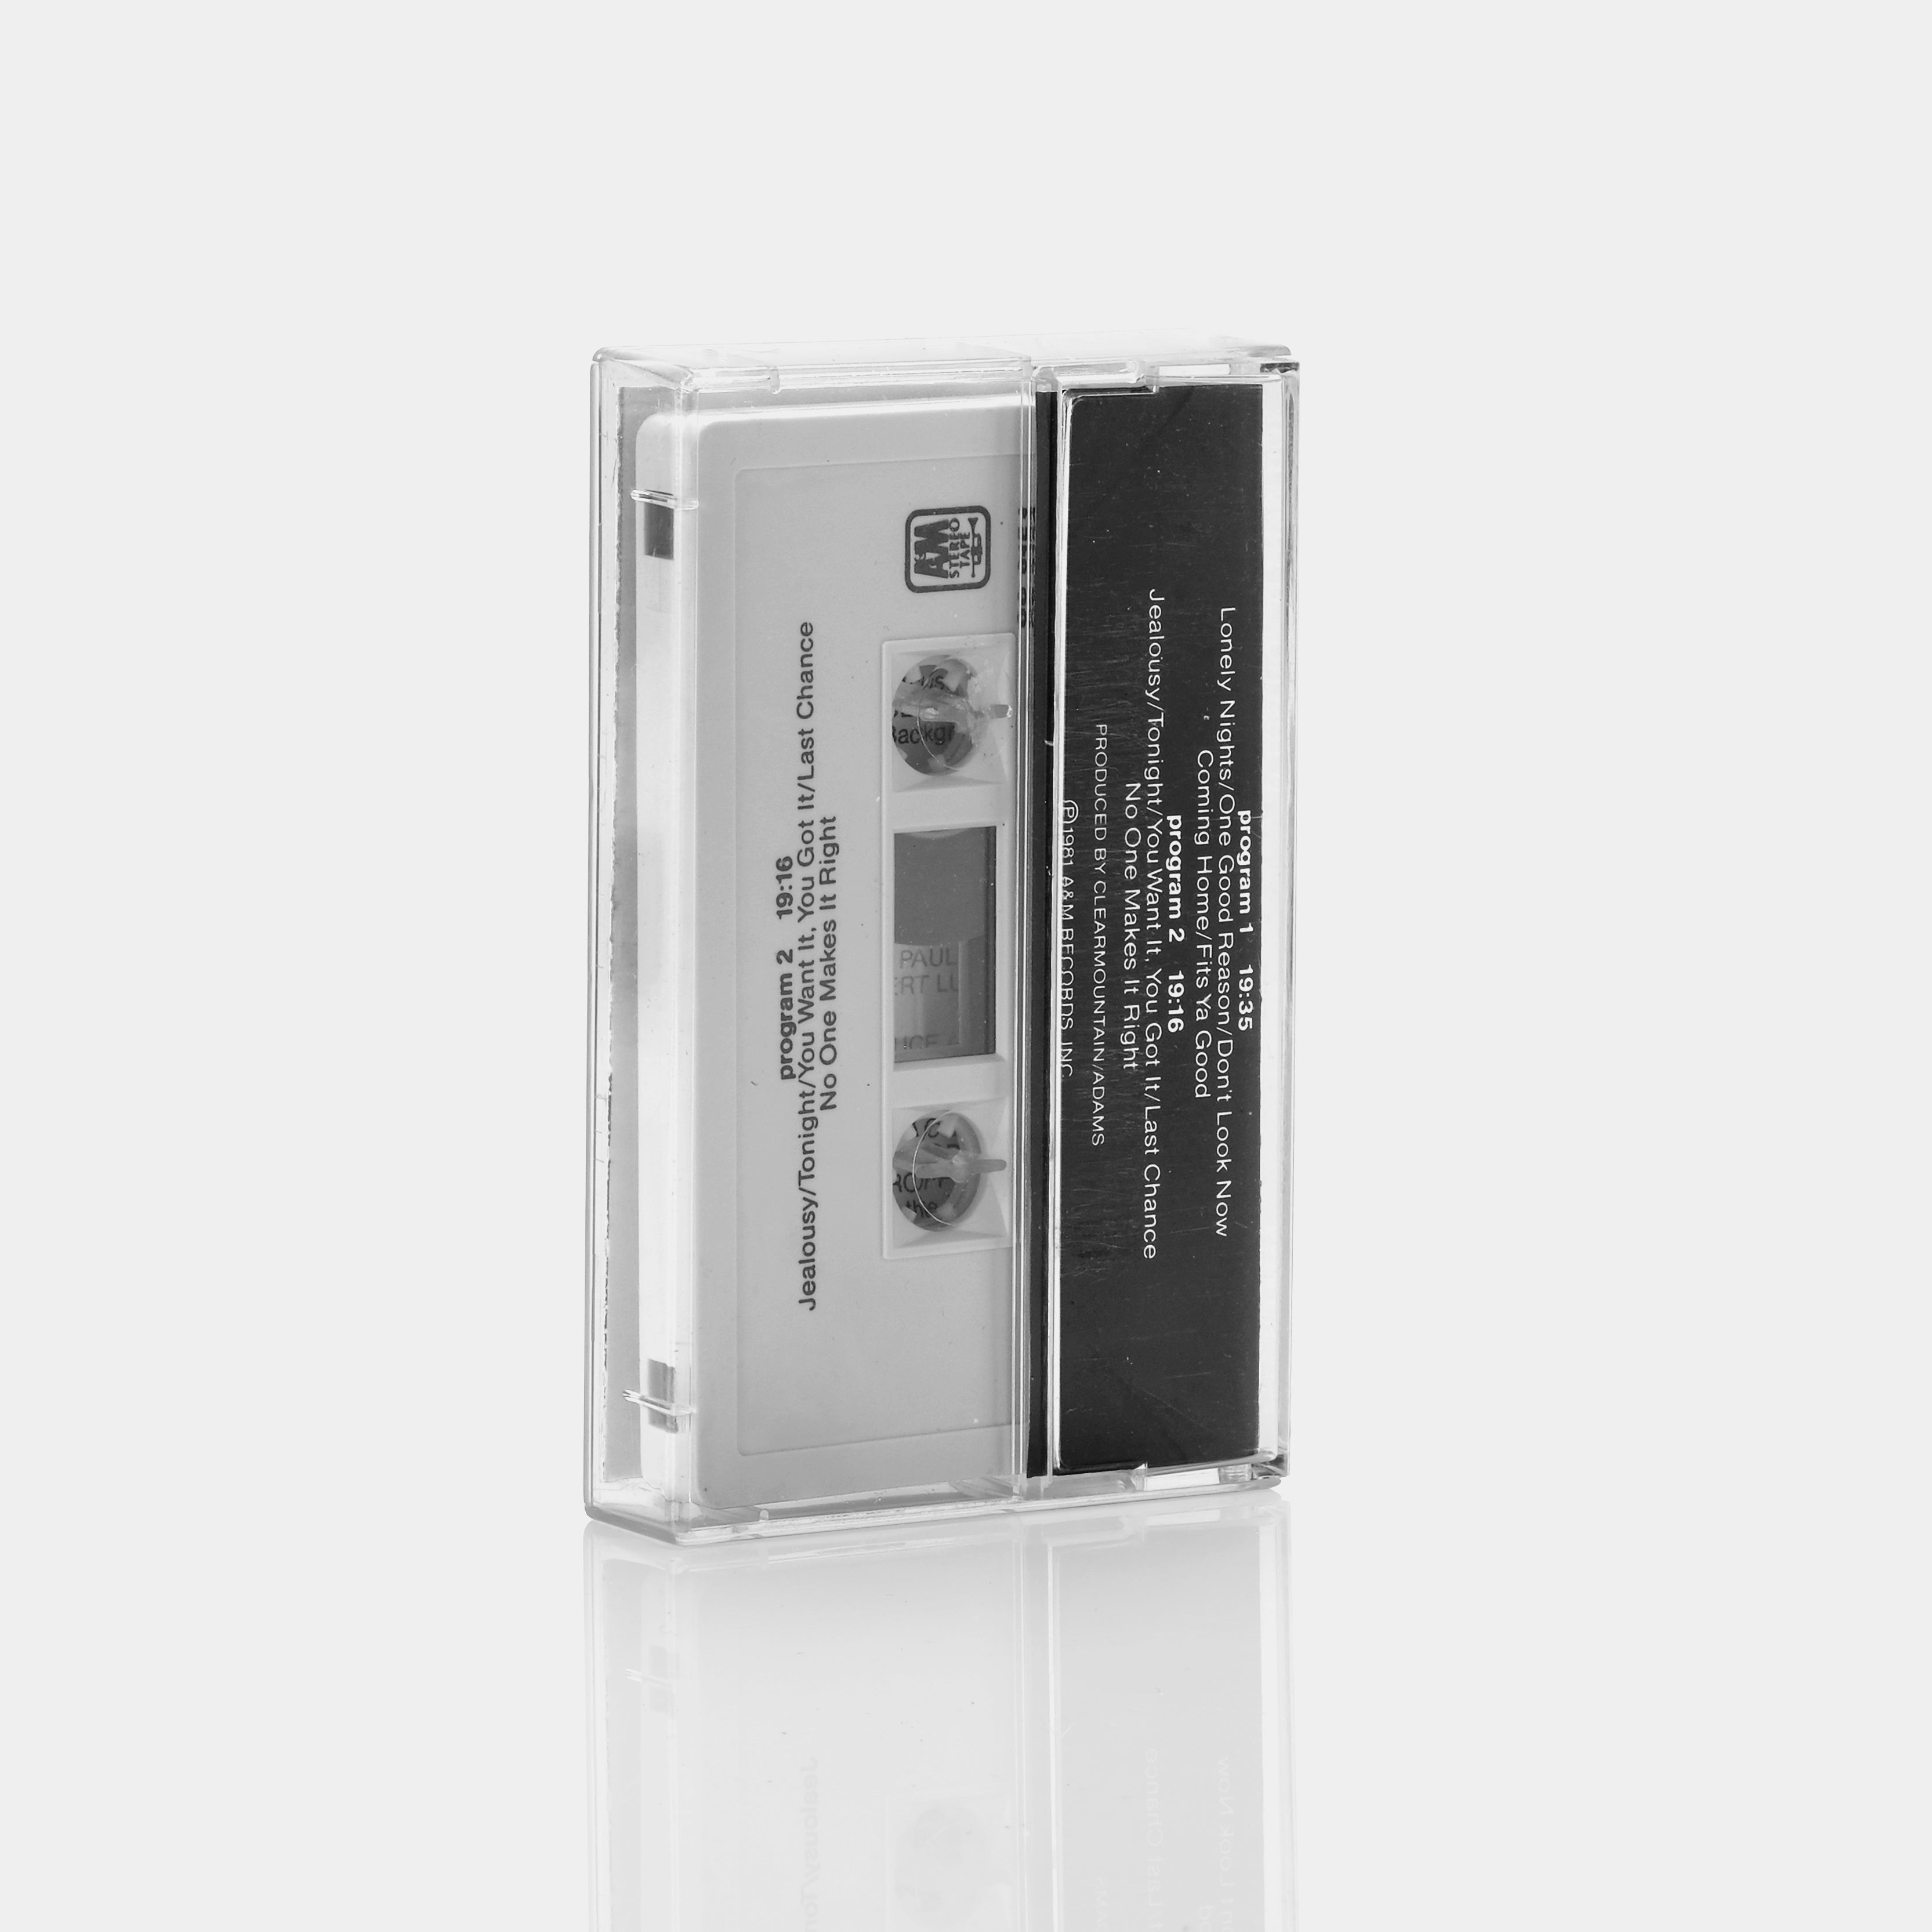 Bryan Adams - You Want It, You Got It Cassette Tape